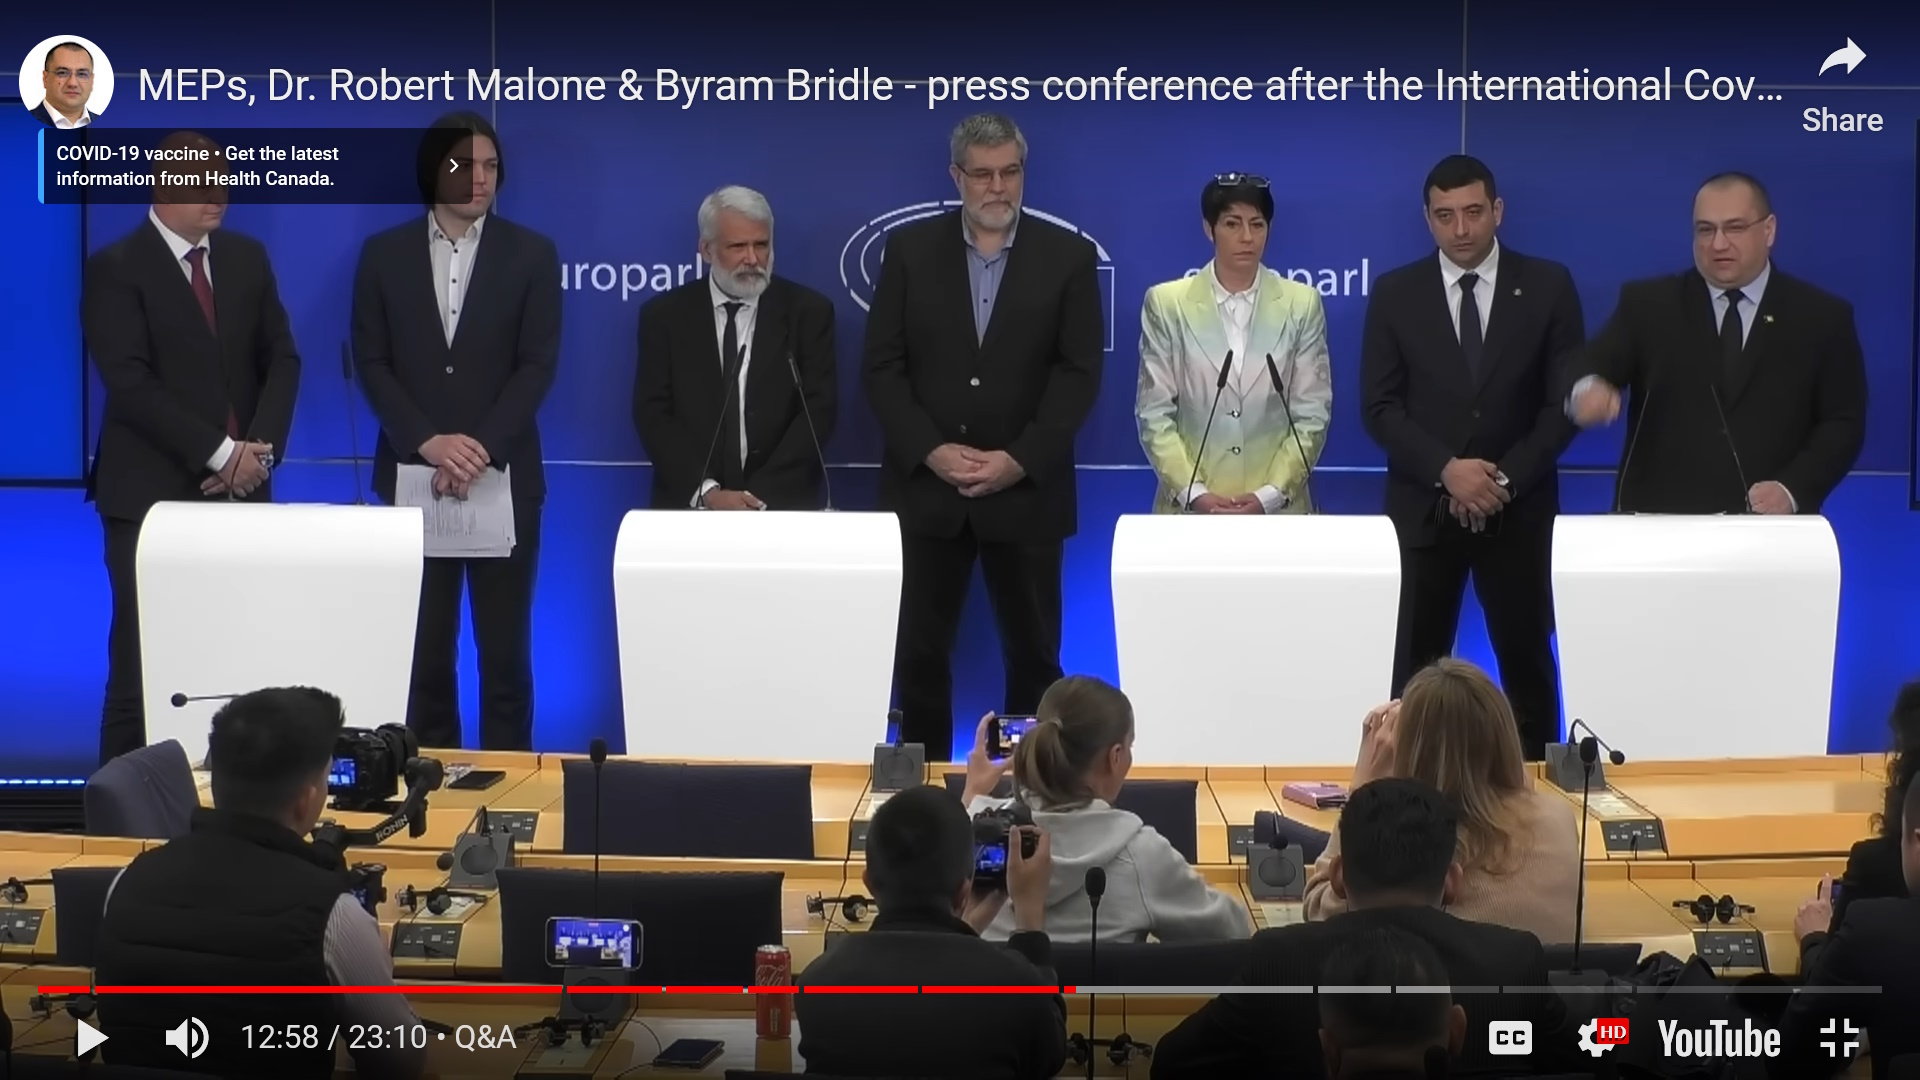 MEPs, Dr. Robert Malone & Byram Bridle - International Covid Summit III